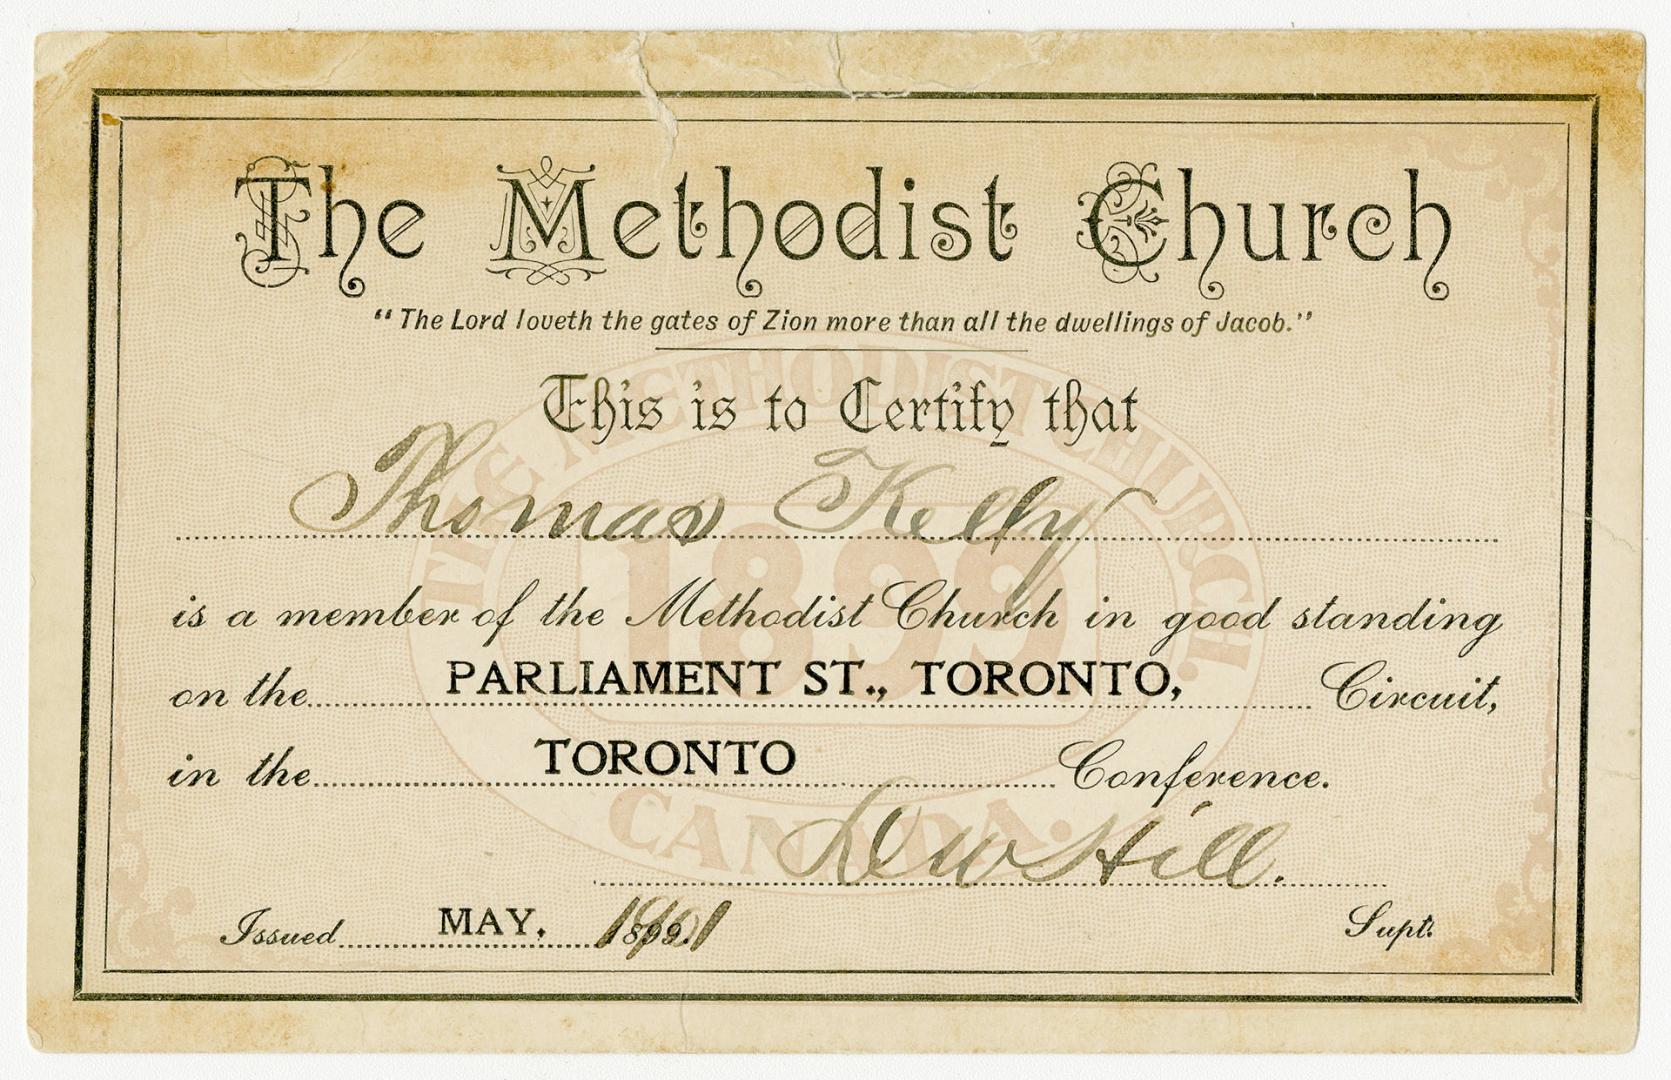 The Methodist Church member certificate